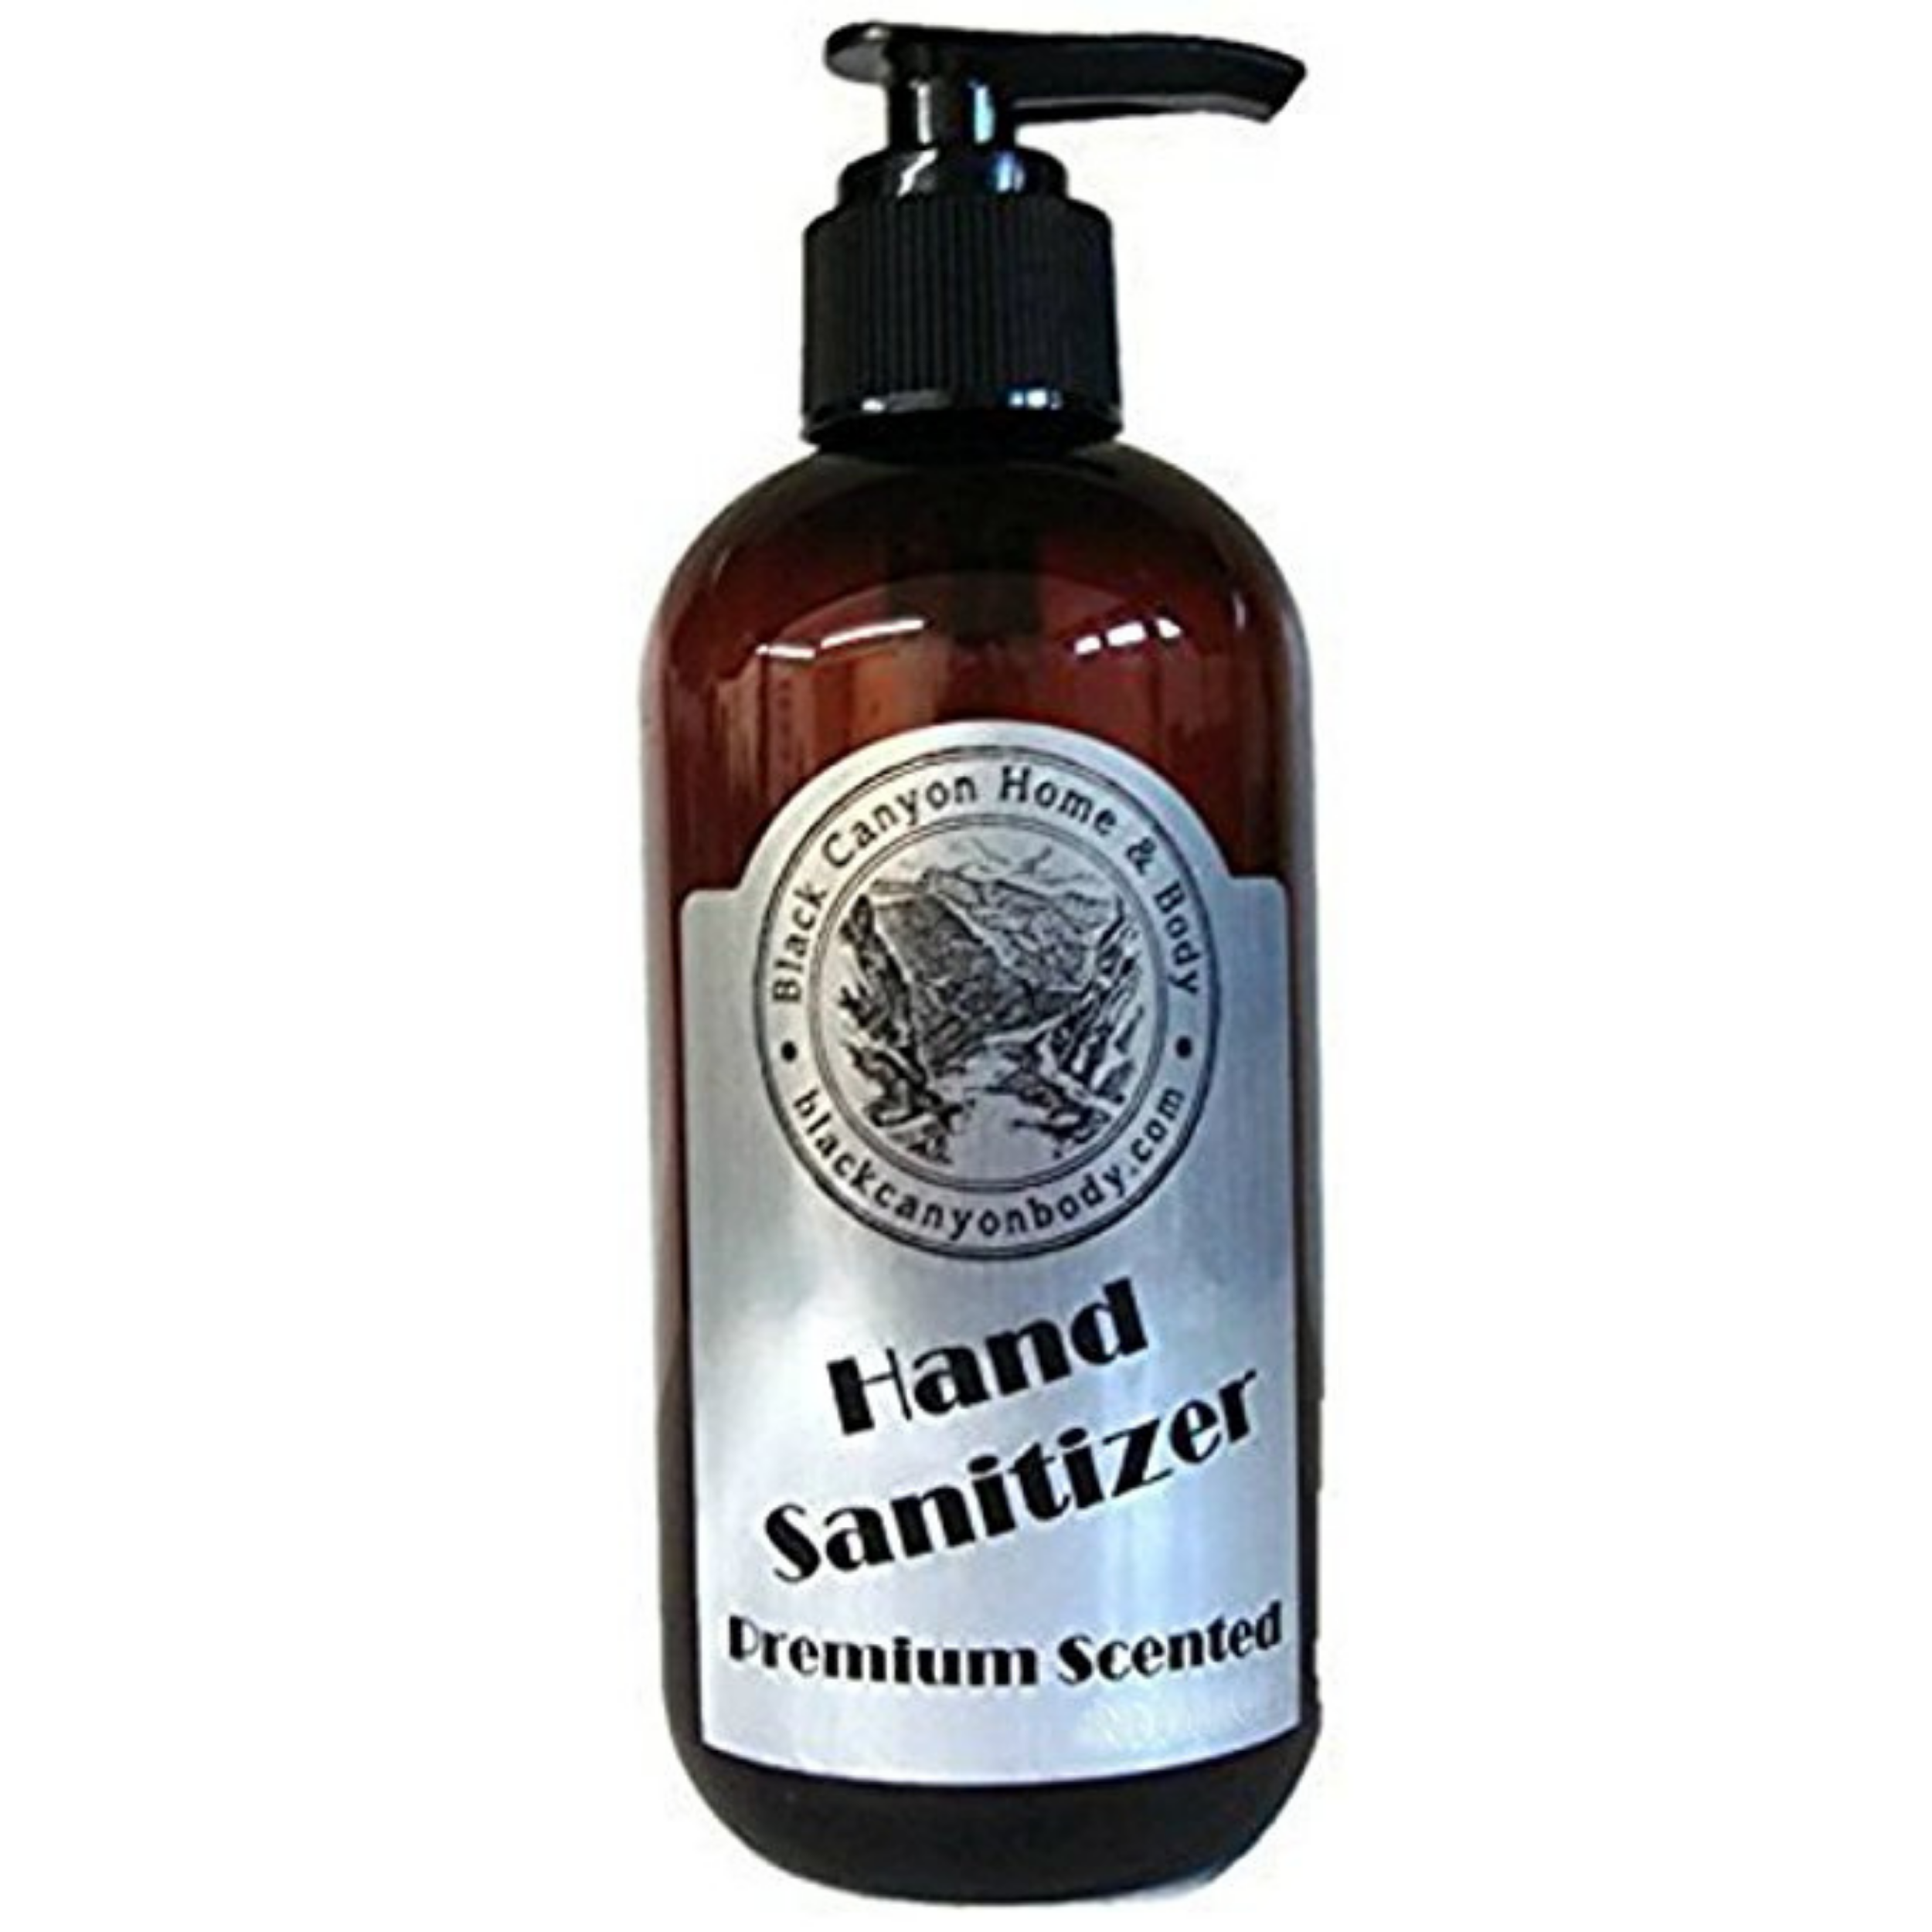 Black Canyon Bergamot Vanilla Scented Hand Sanitizer Gel